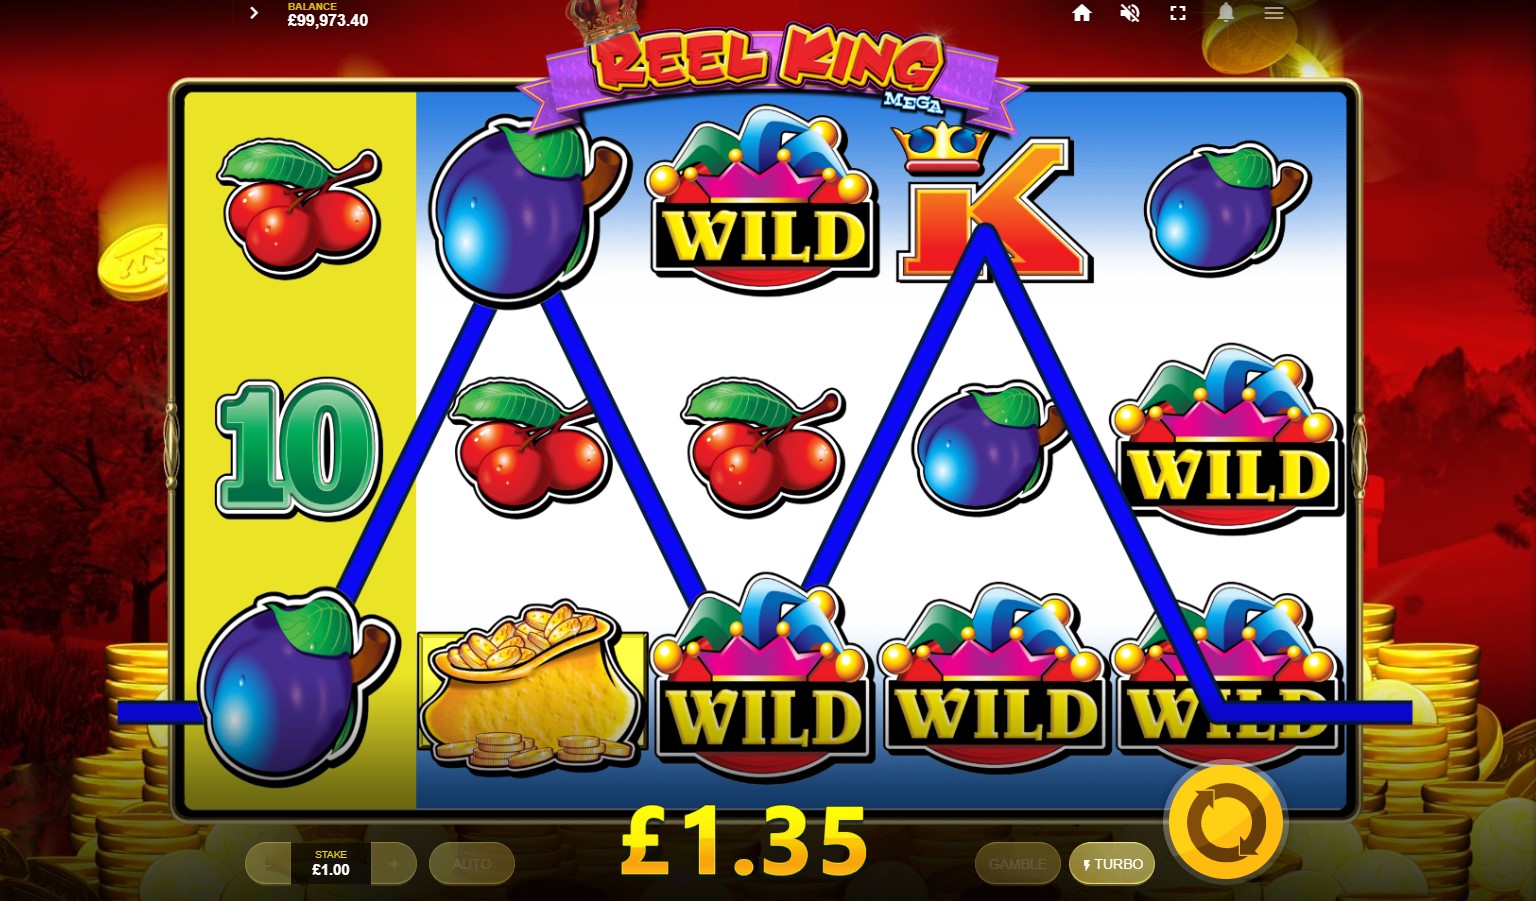 Wild symbol win during Reel King Mega online slot game